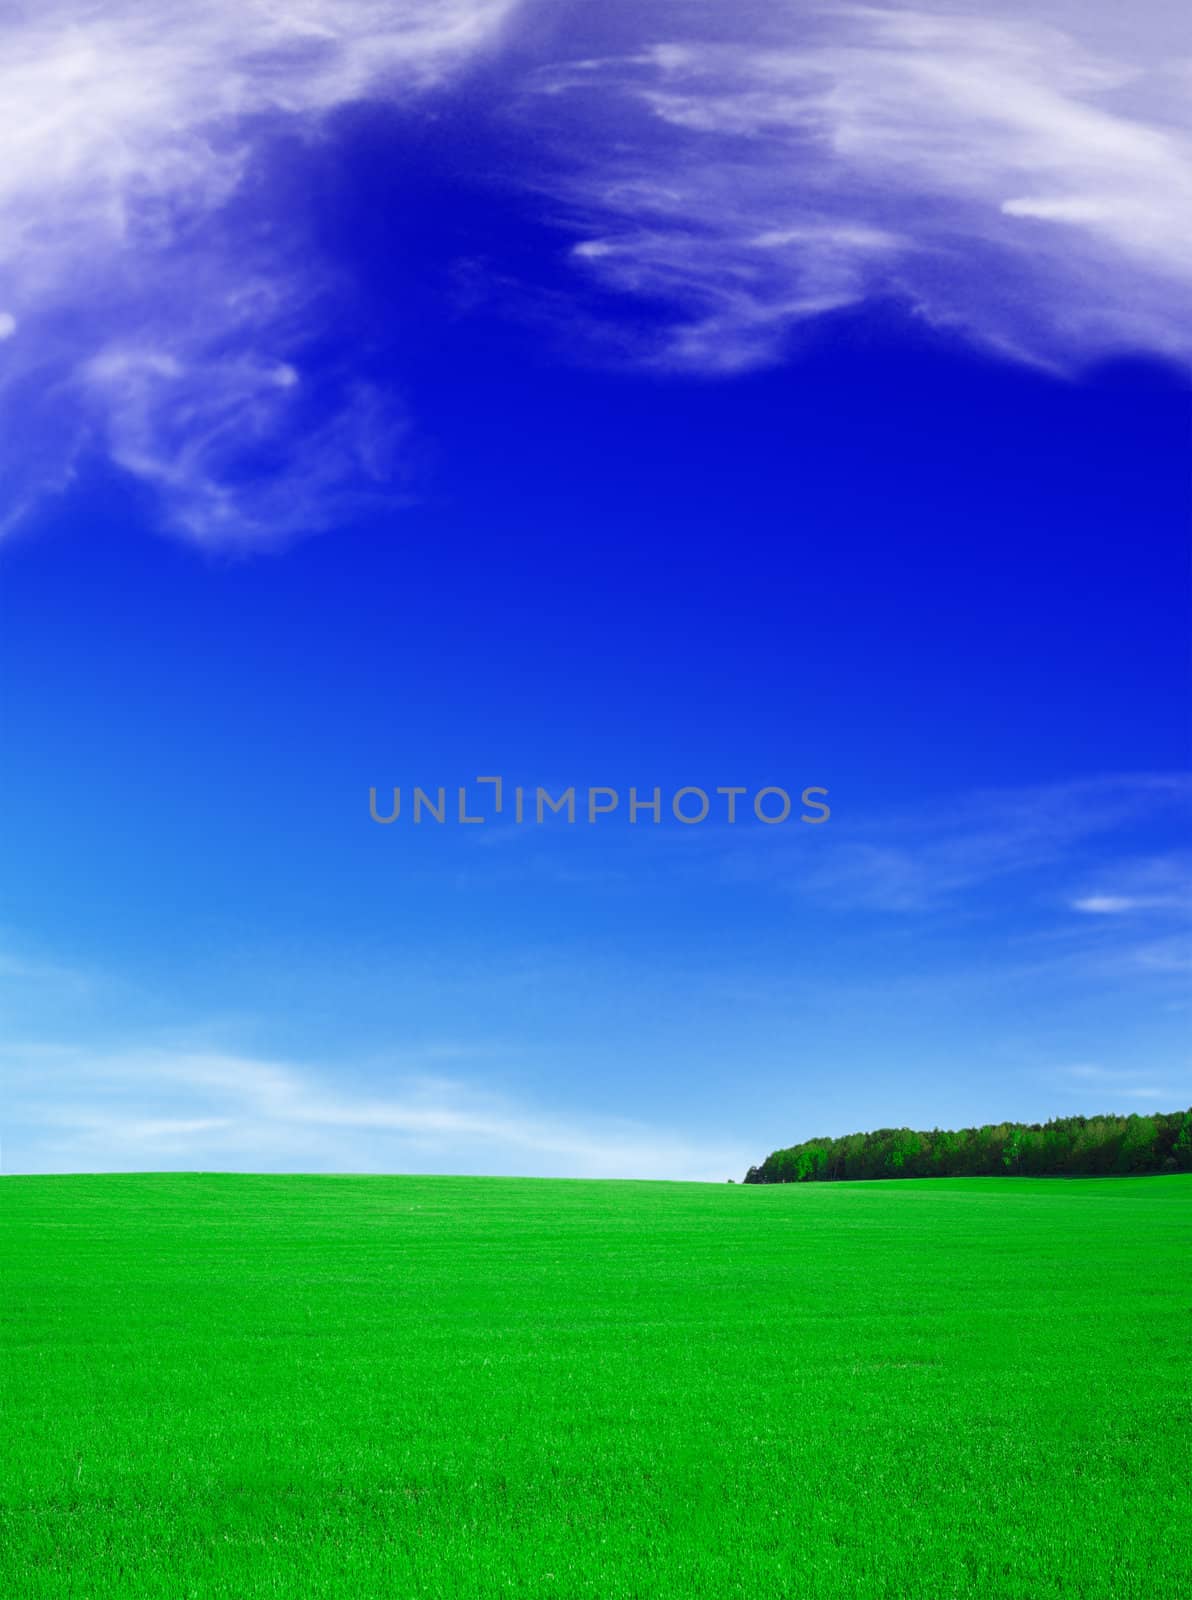 Summer landscape - blue sky and green field